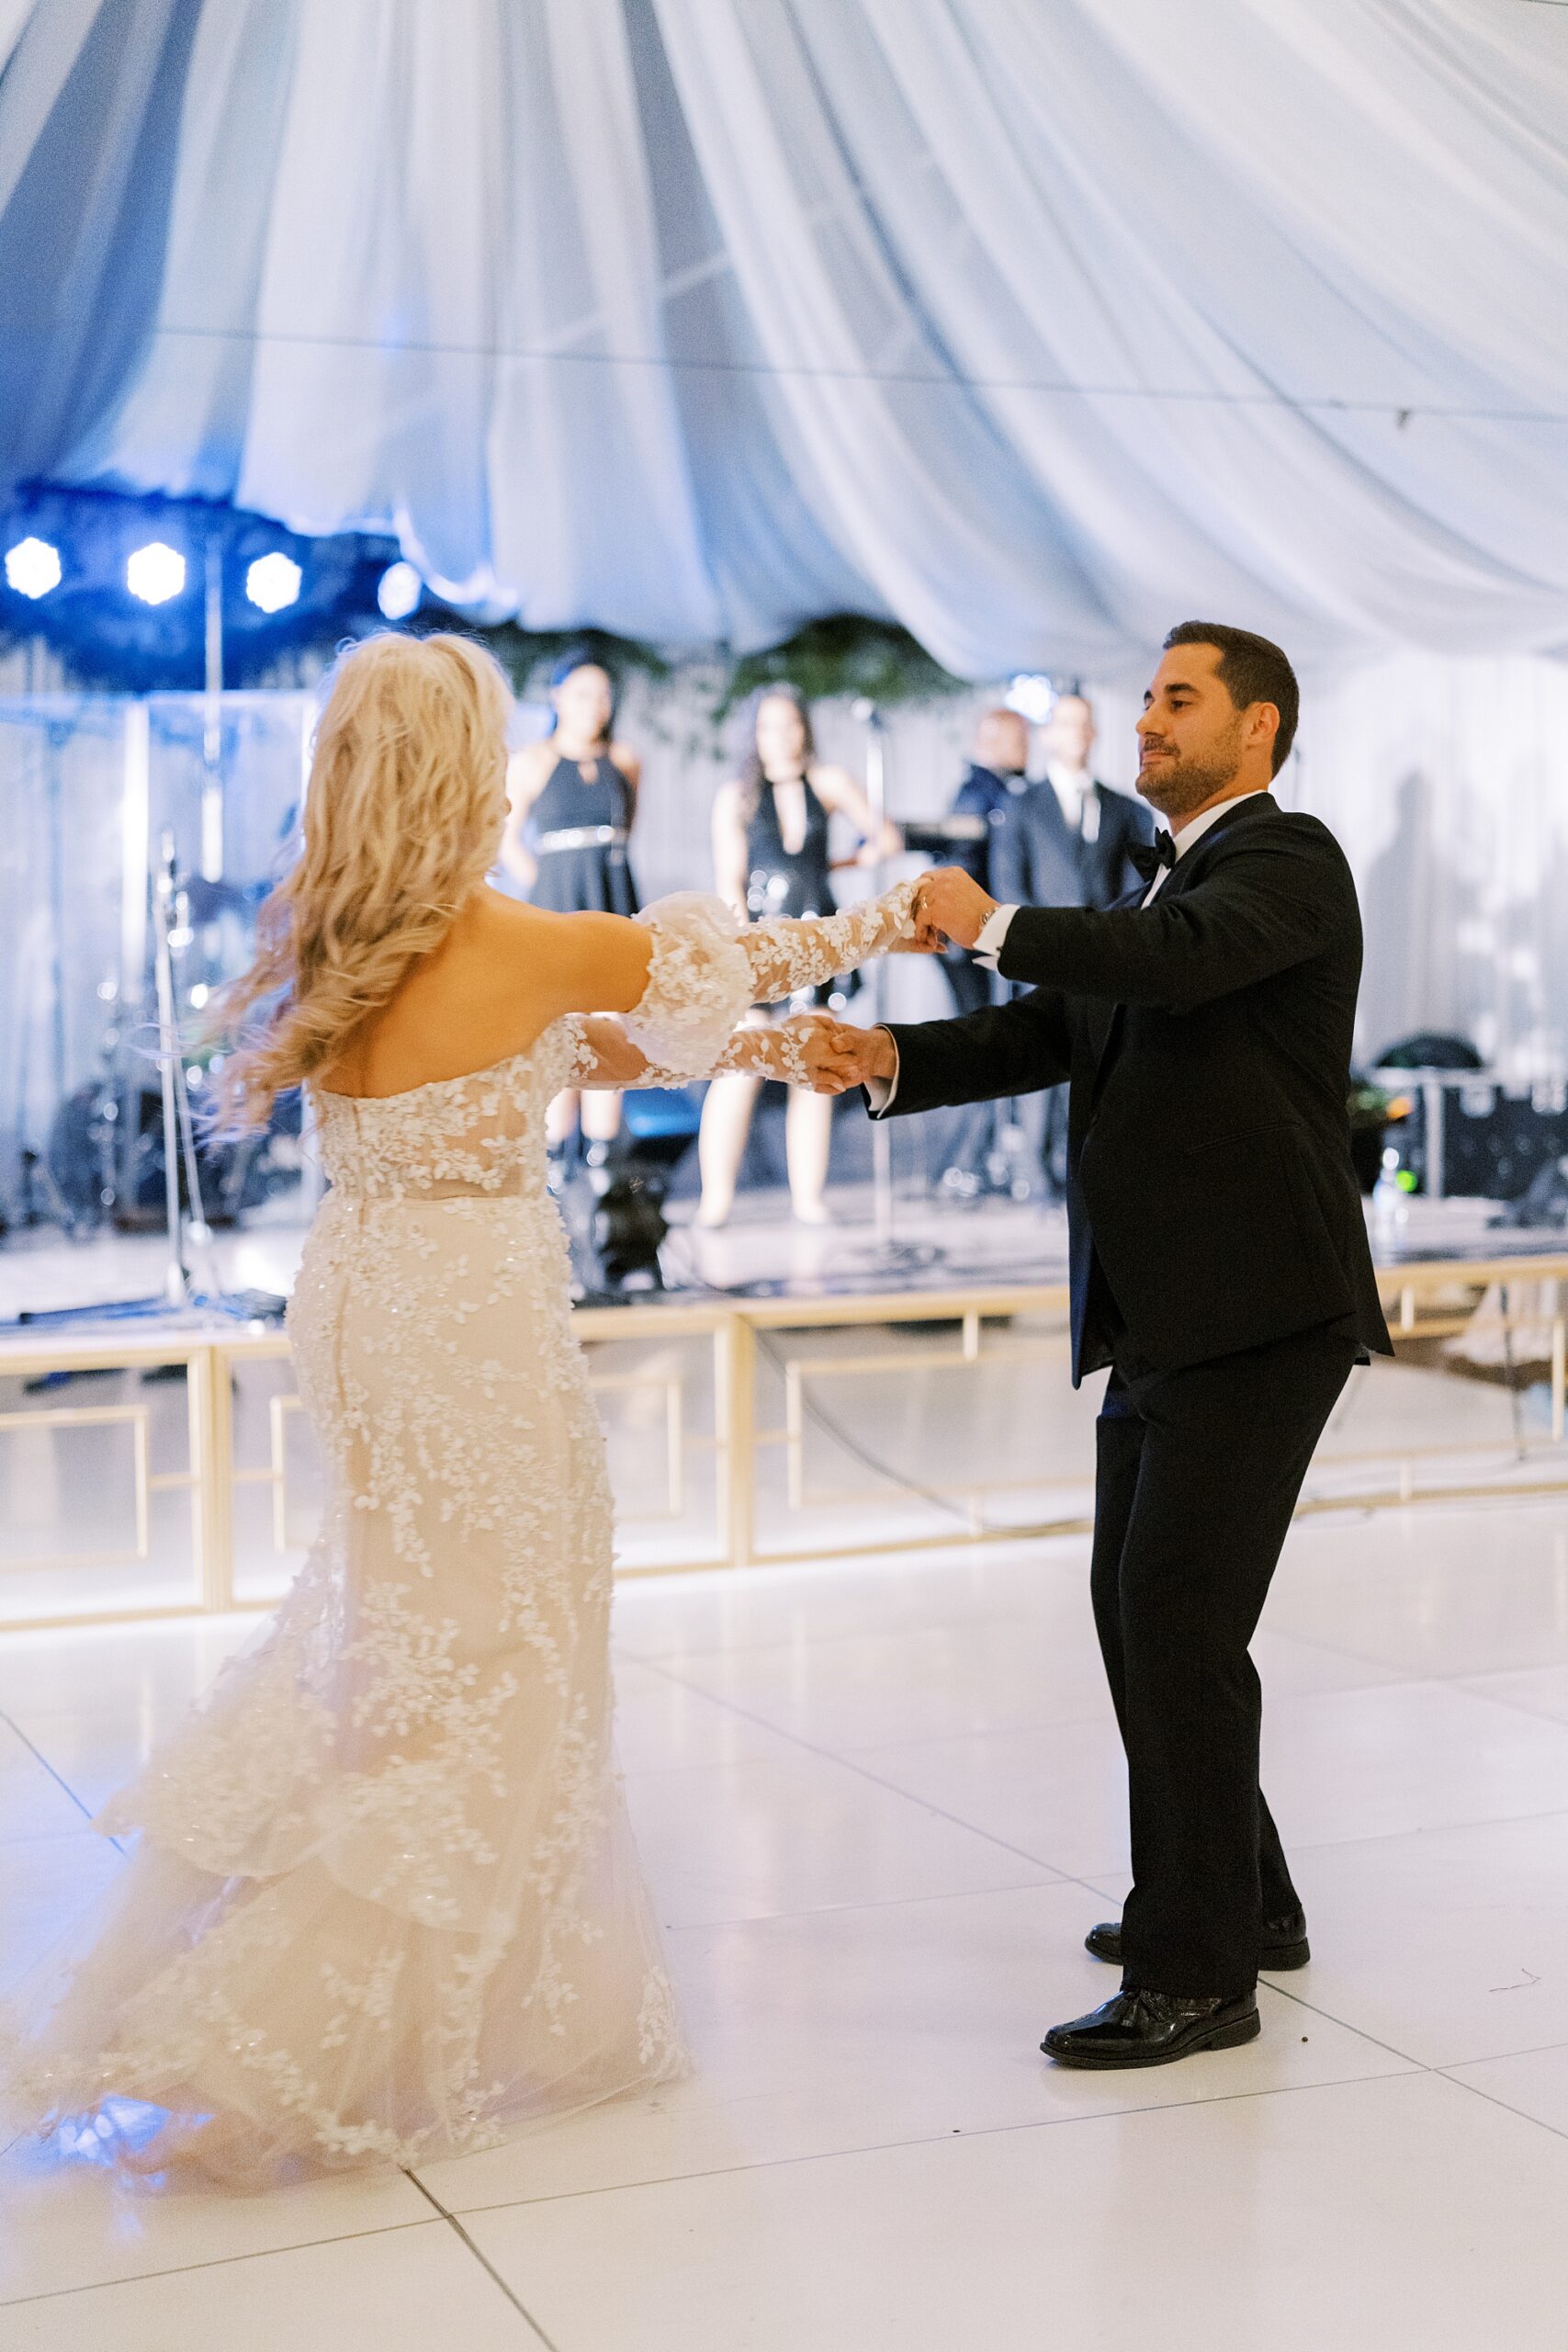 newlyweds dance together during wedding reception at the University of Louisiana at Lafayette alumni center